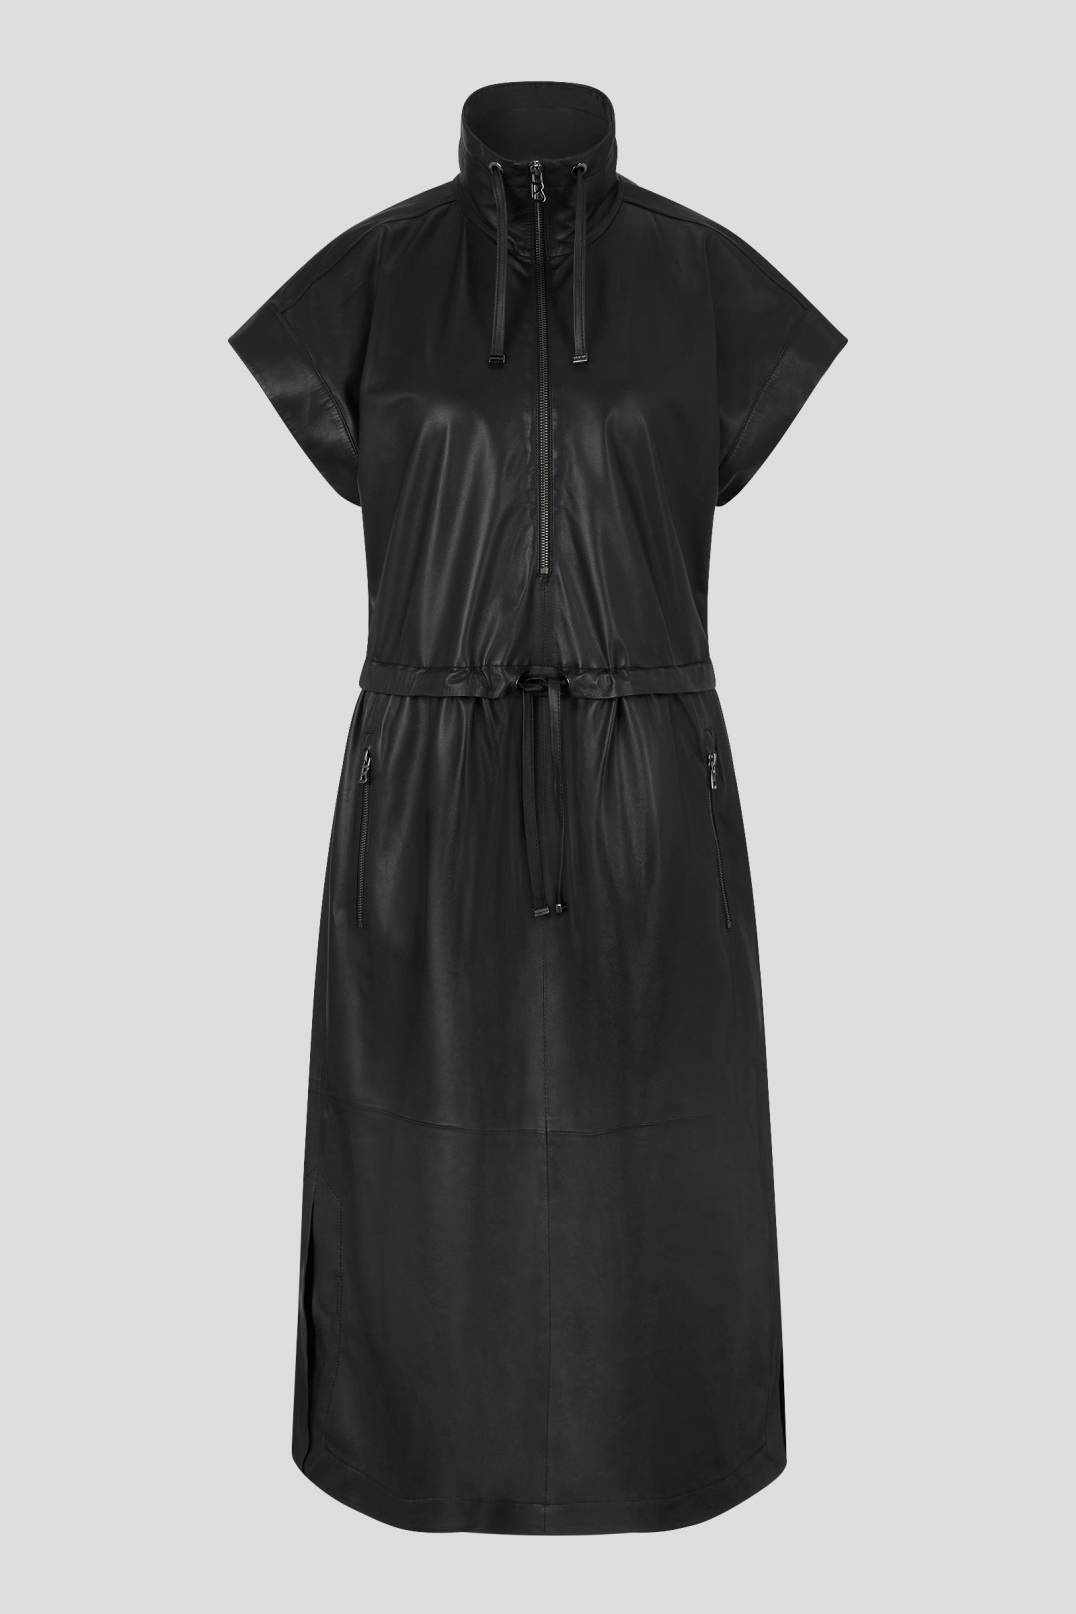 GLORIA LEATHER DRESS IN BLACK - 1